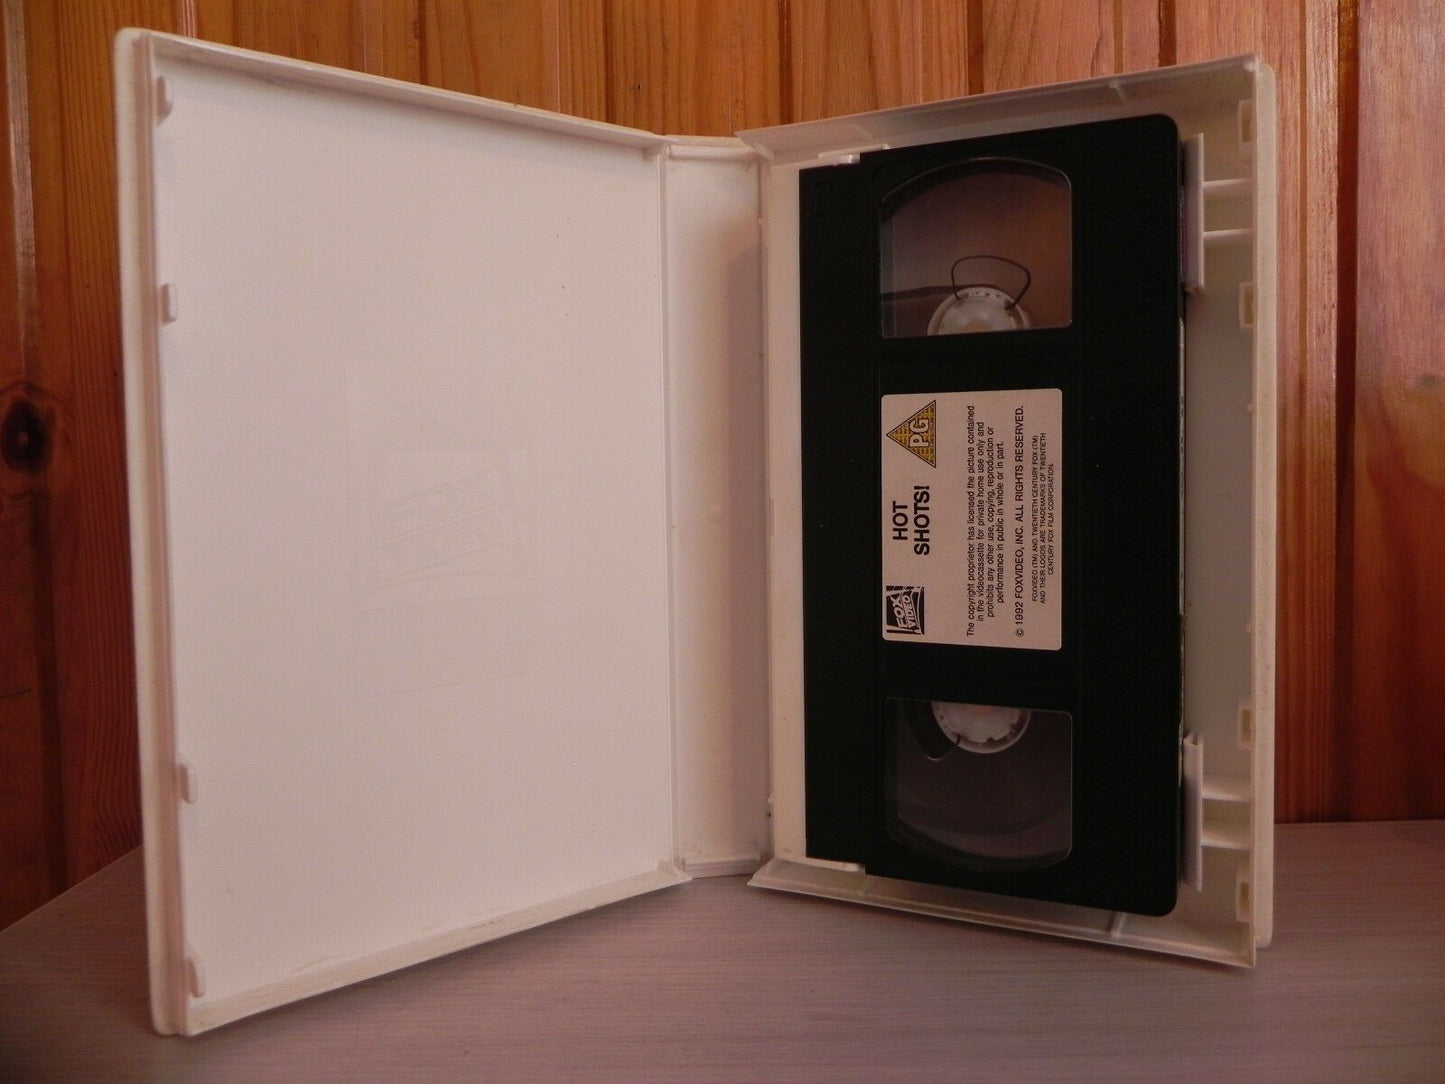 Hot Shots - Original Big Box - Ex-rental - Lampoon Comedy - Charlie Sheen - VHS-